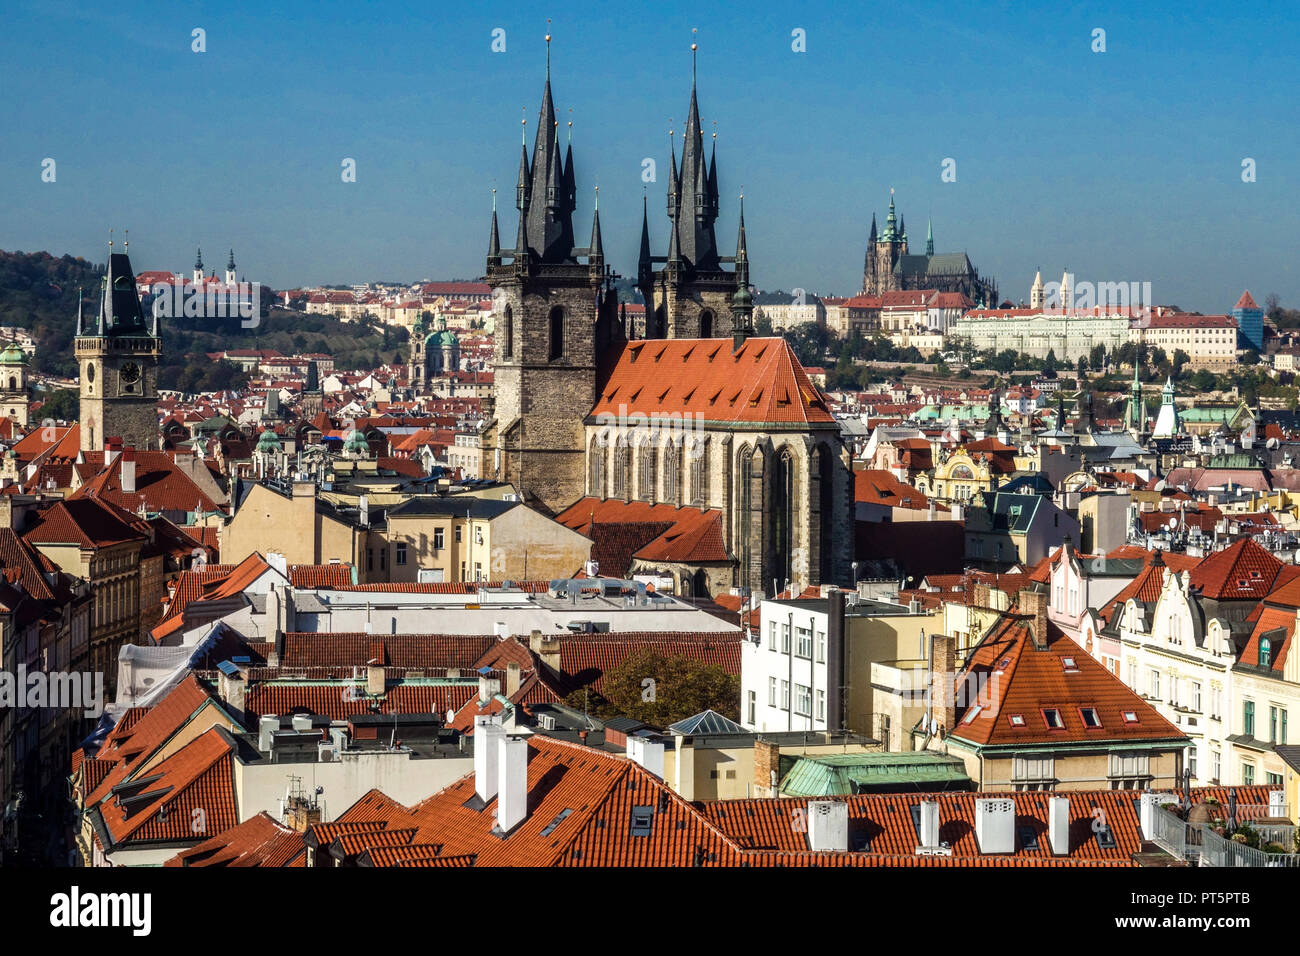 Panoramica del Castello di Praga Praga Repubblica Ceca Europa città città europea Tyn Chiesa di nostra Signora prima di Tyn Praga monumenti storici edifici storici Foto Stock